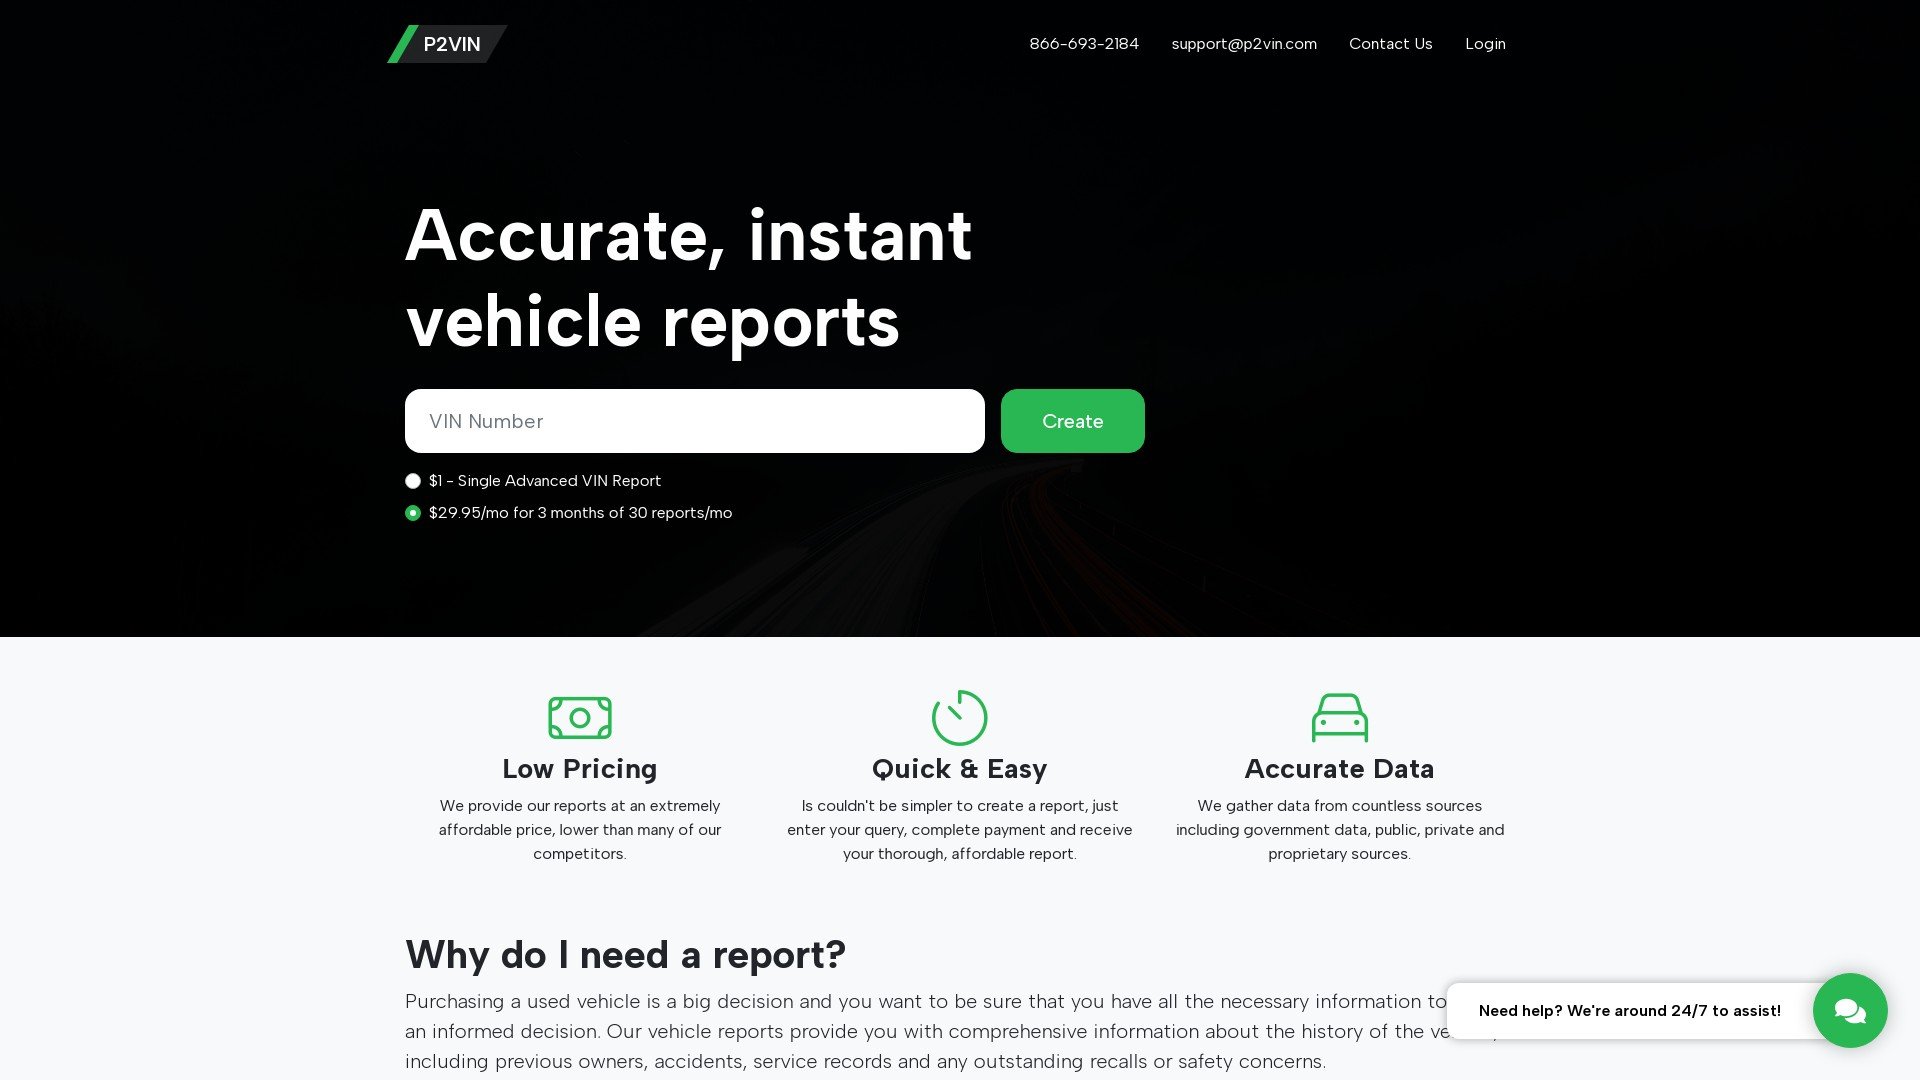 Is P2VIN at p2vin.com a Scam or Legitimate Vehicle Report Website?